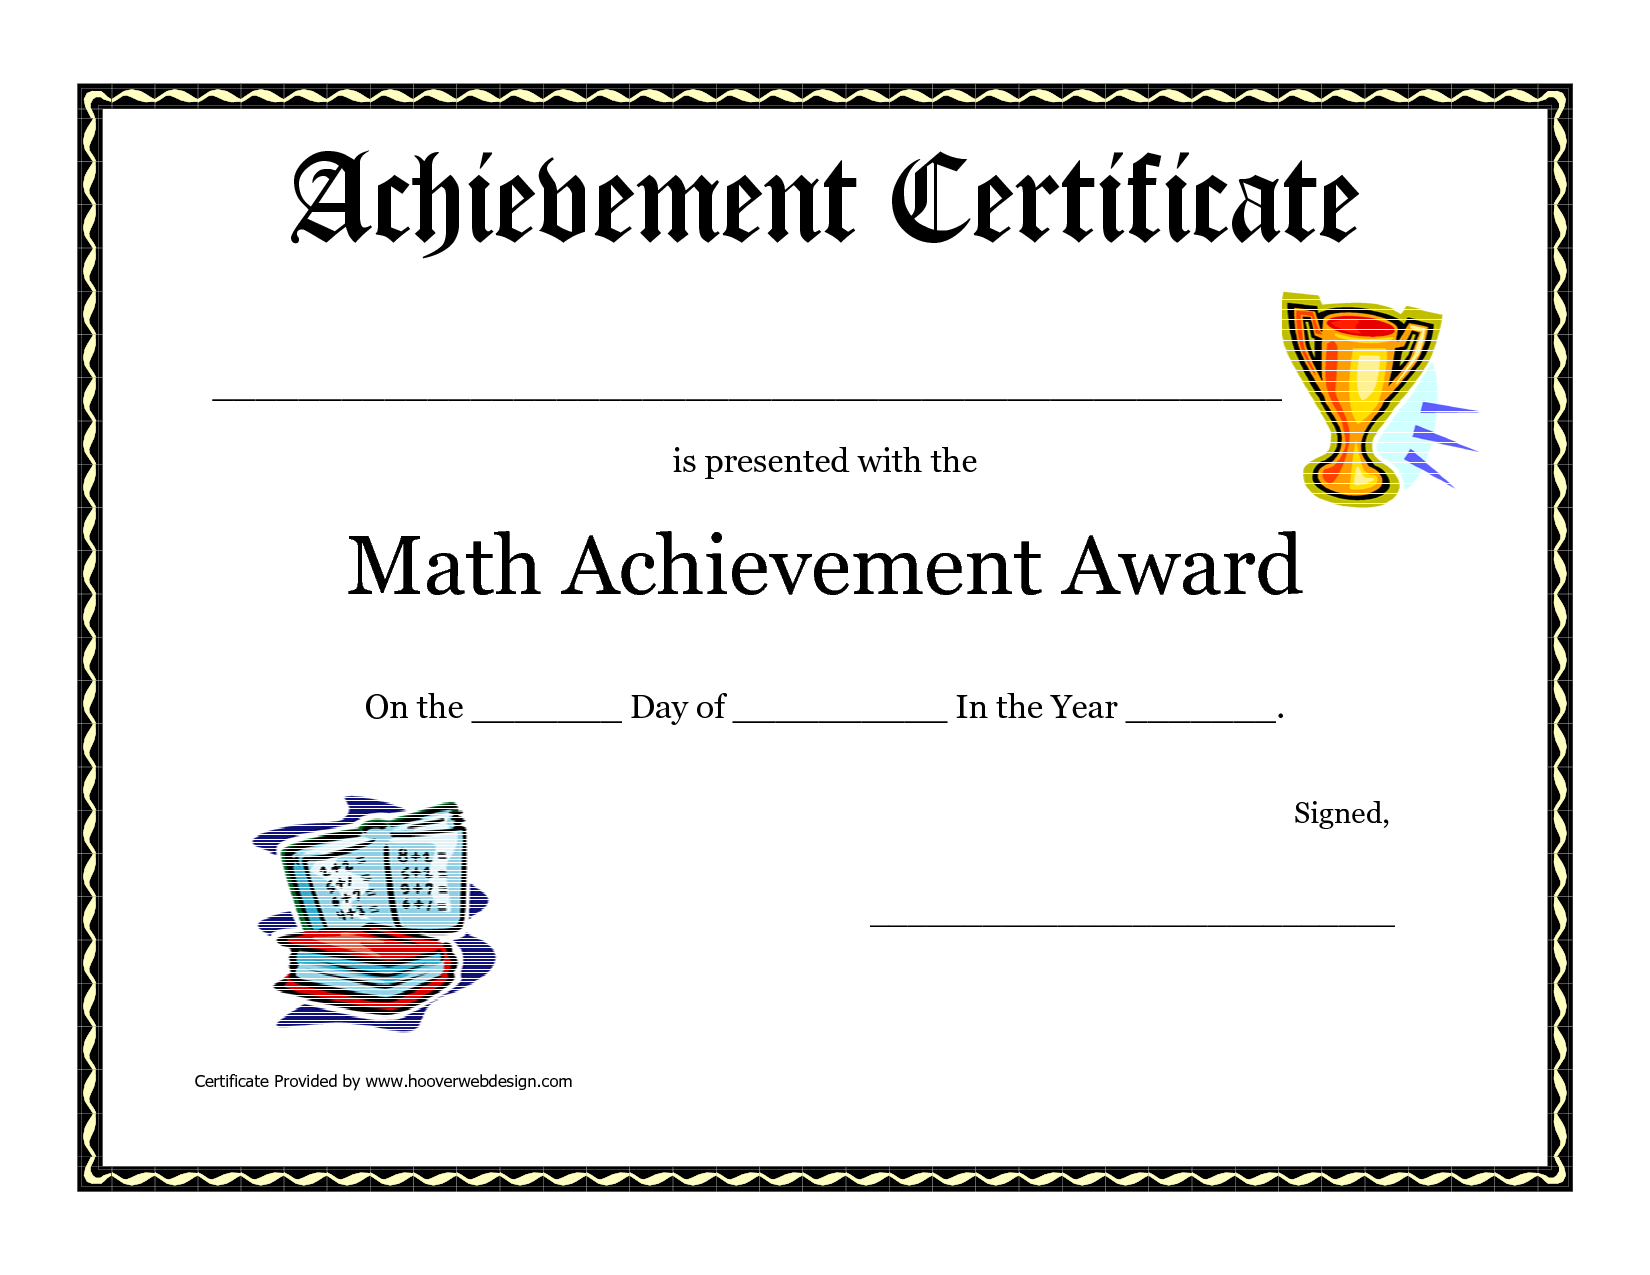 Math Achievement Award Printable Certificate Pdf | Math Within Star Award Certificate Template